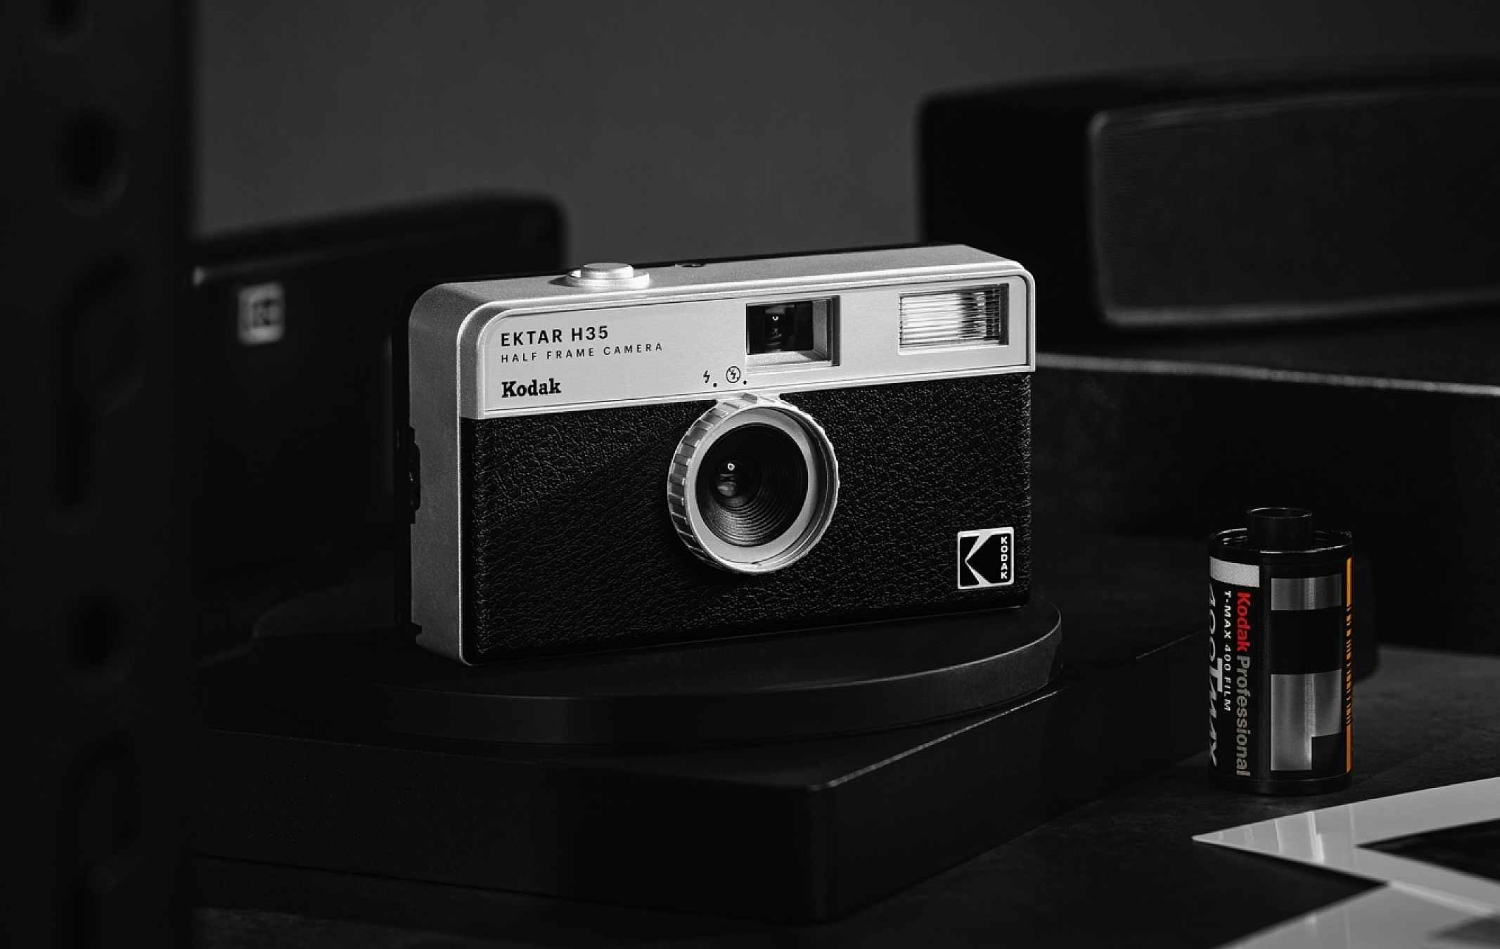  Compact camera Kodak Ektar H35 35mm Half Frame Brlack